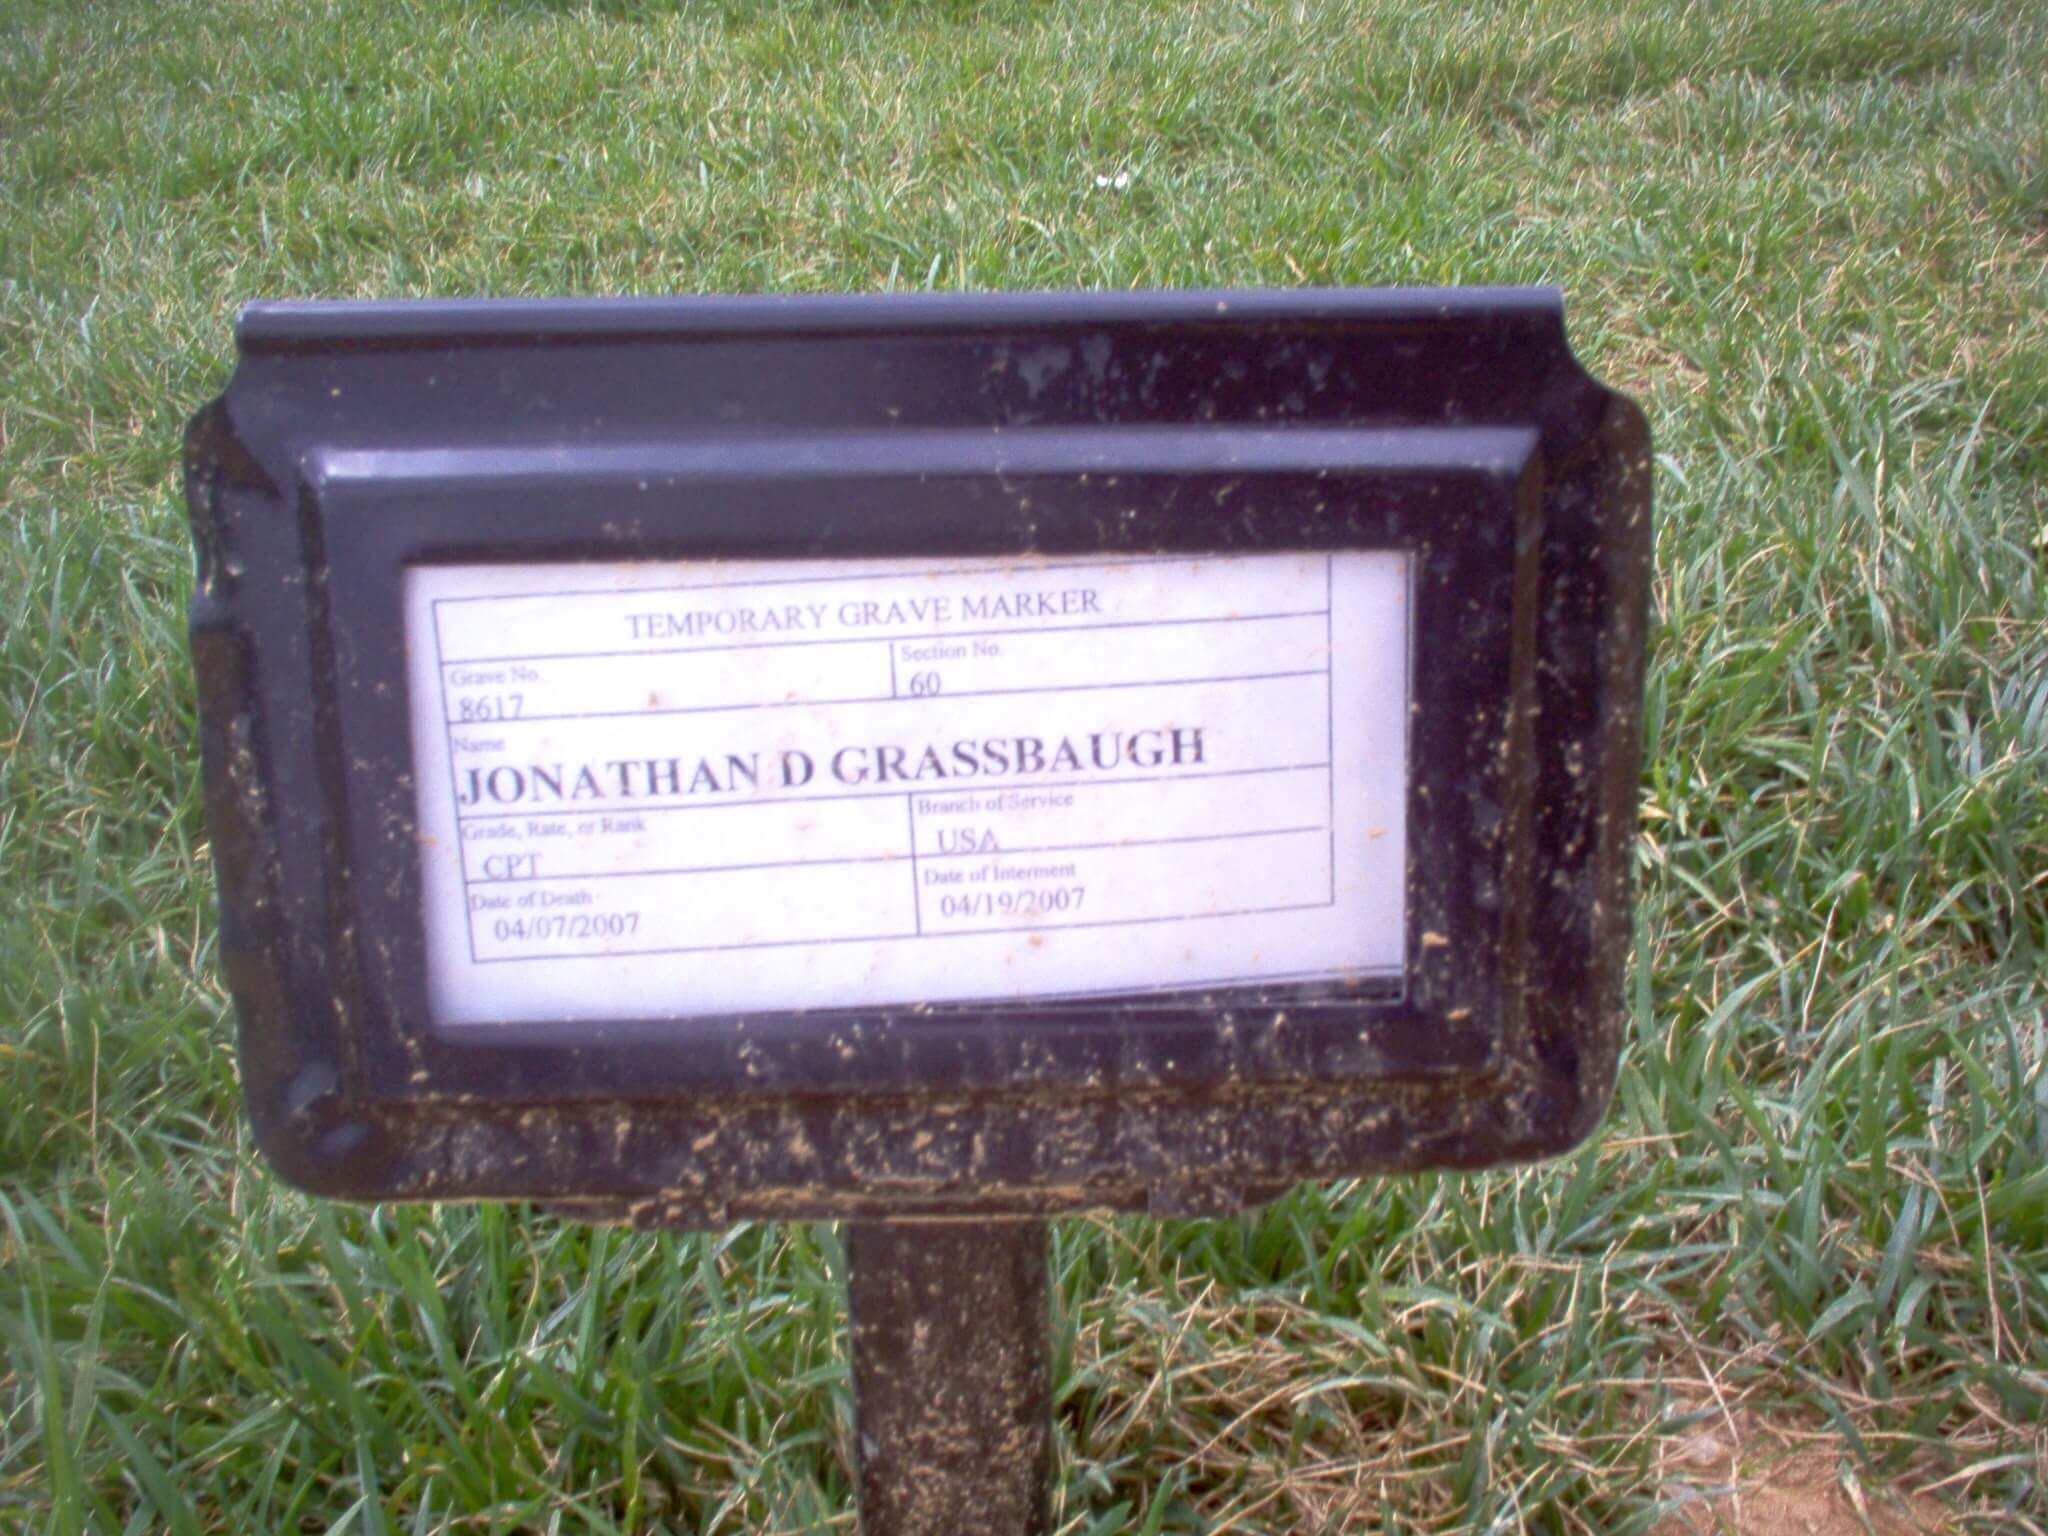 jdgrassbaugh-gravesite-photo-may-2007-001